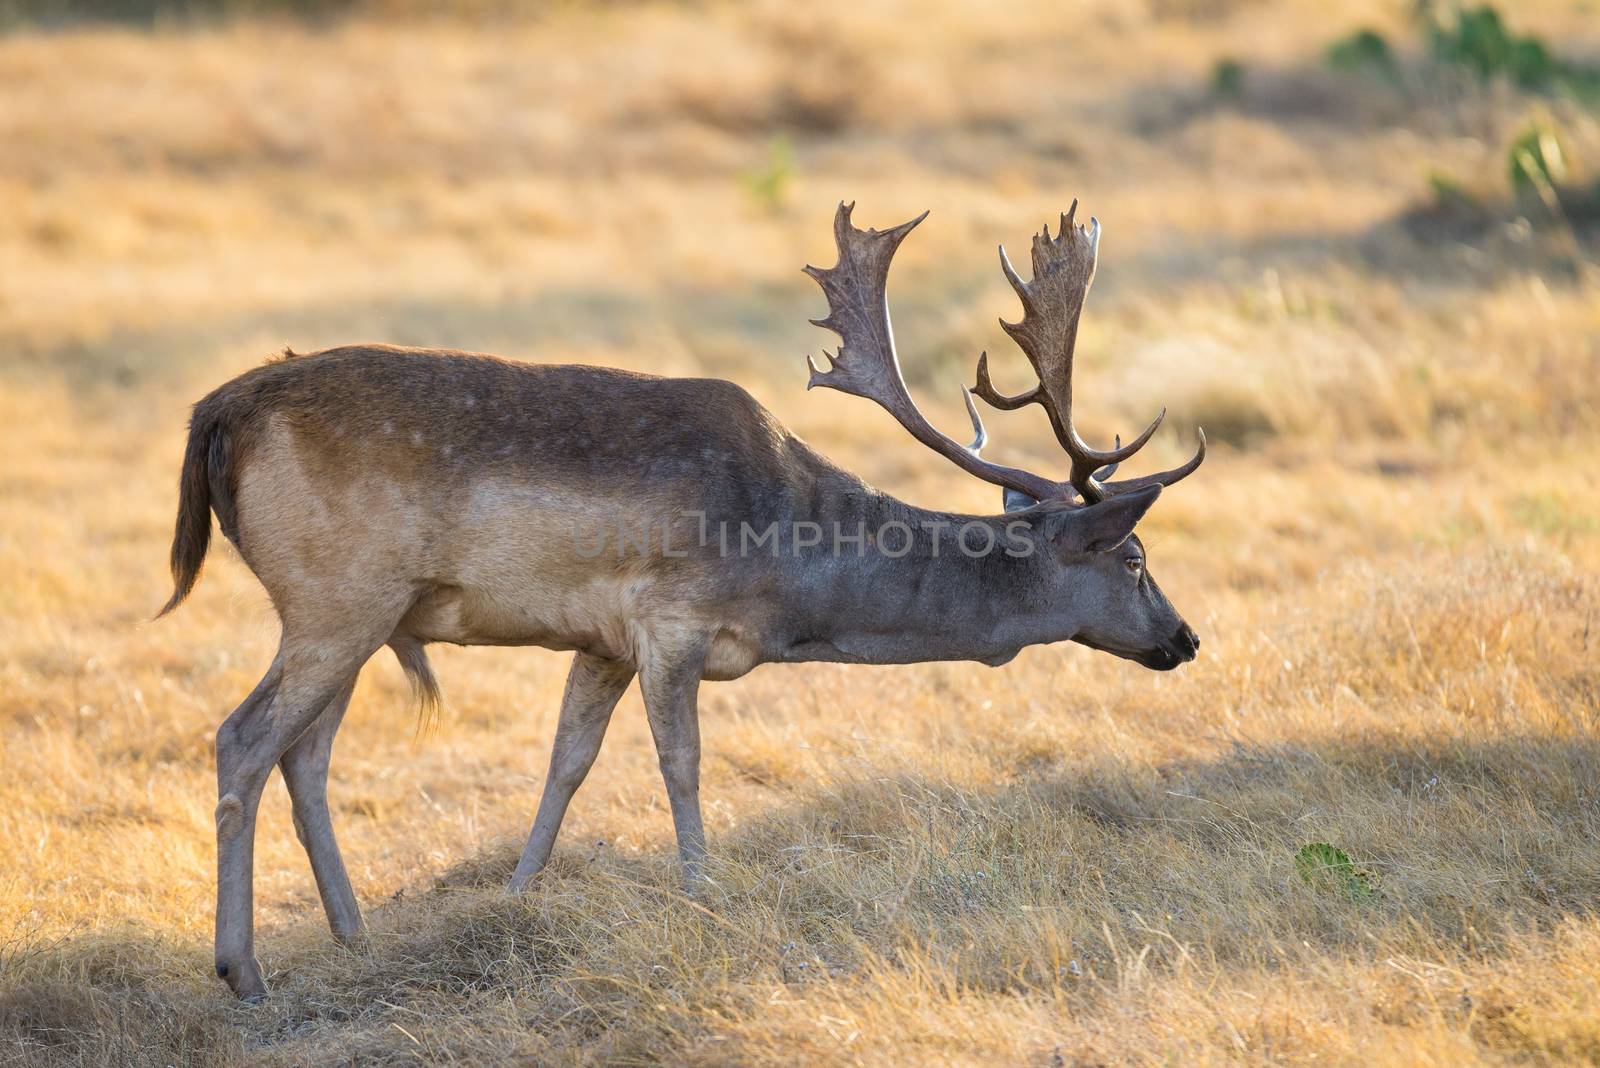 Spotted Fallow Deer by DJHolmes86